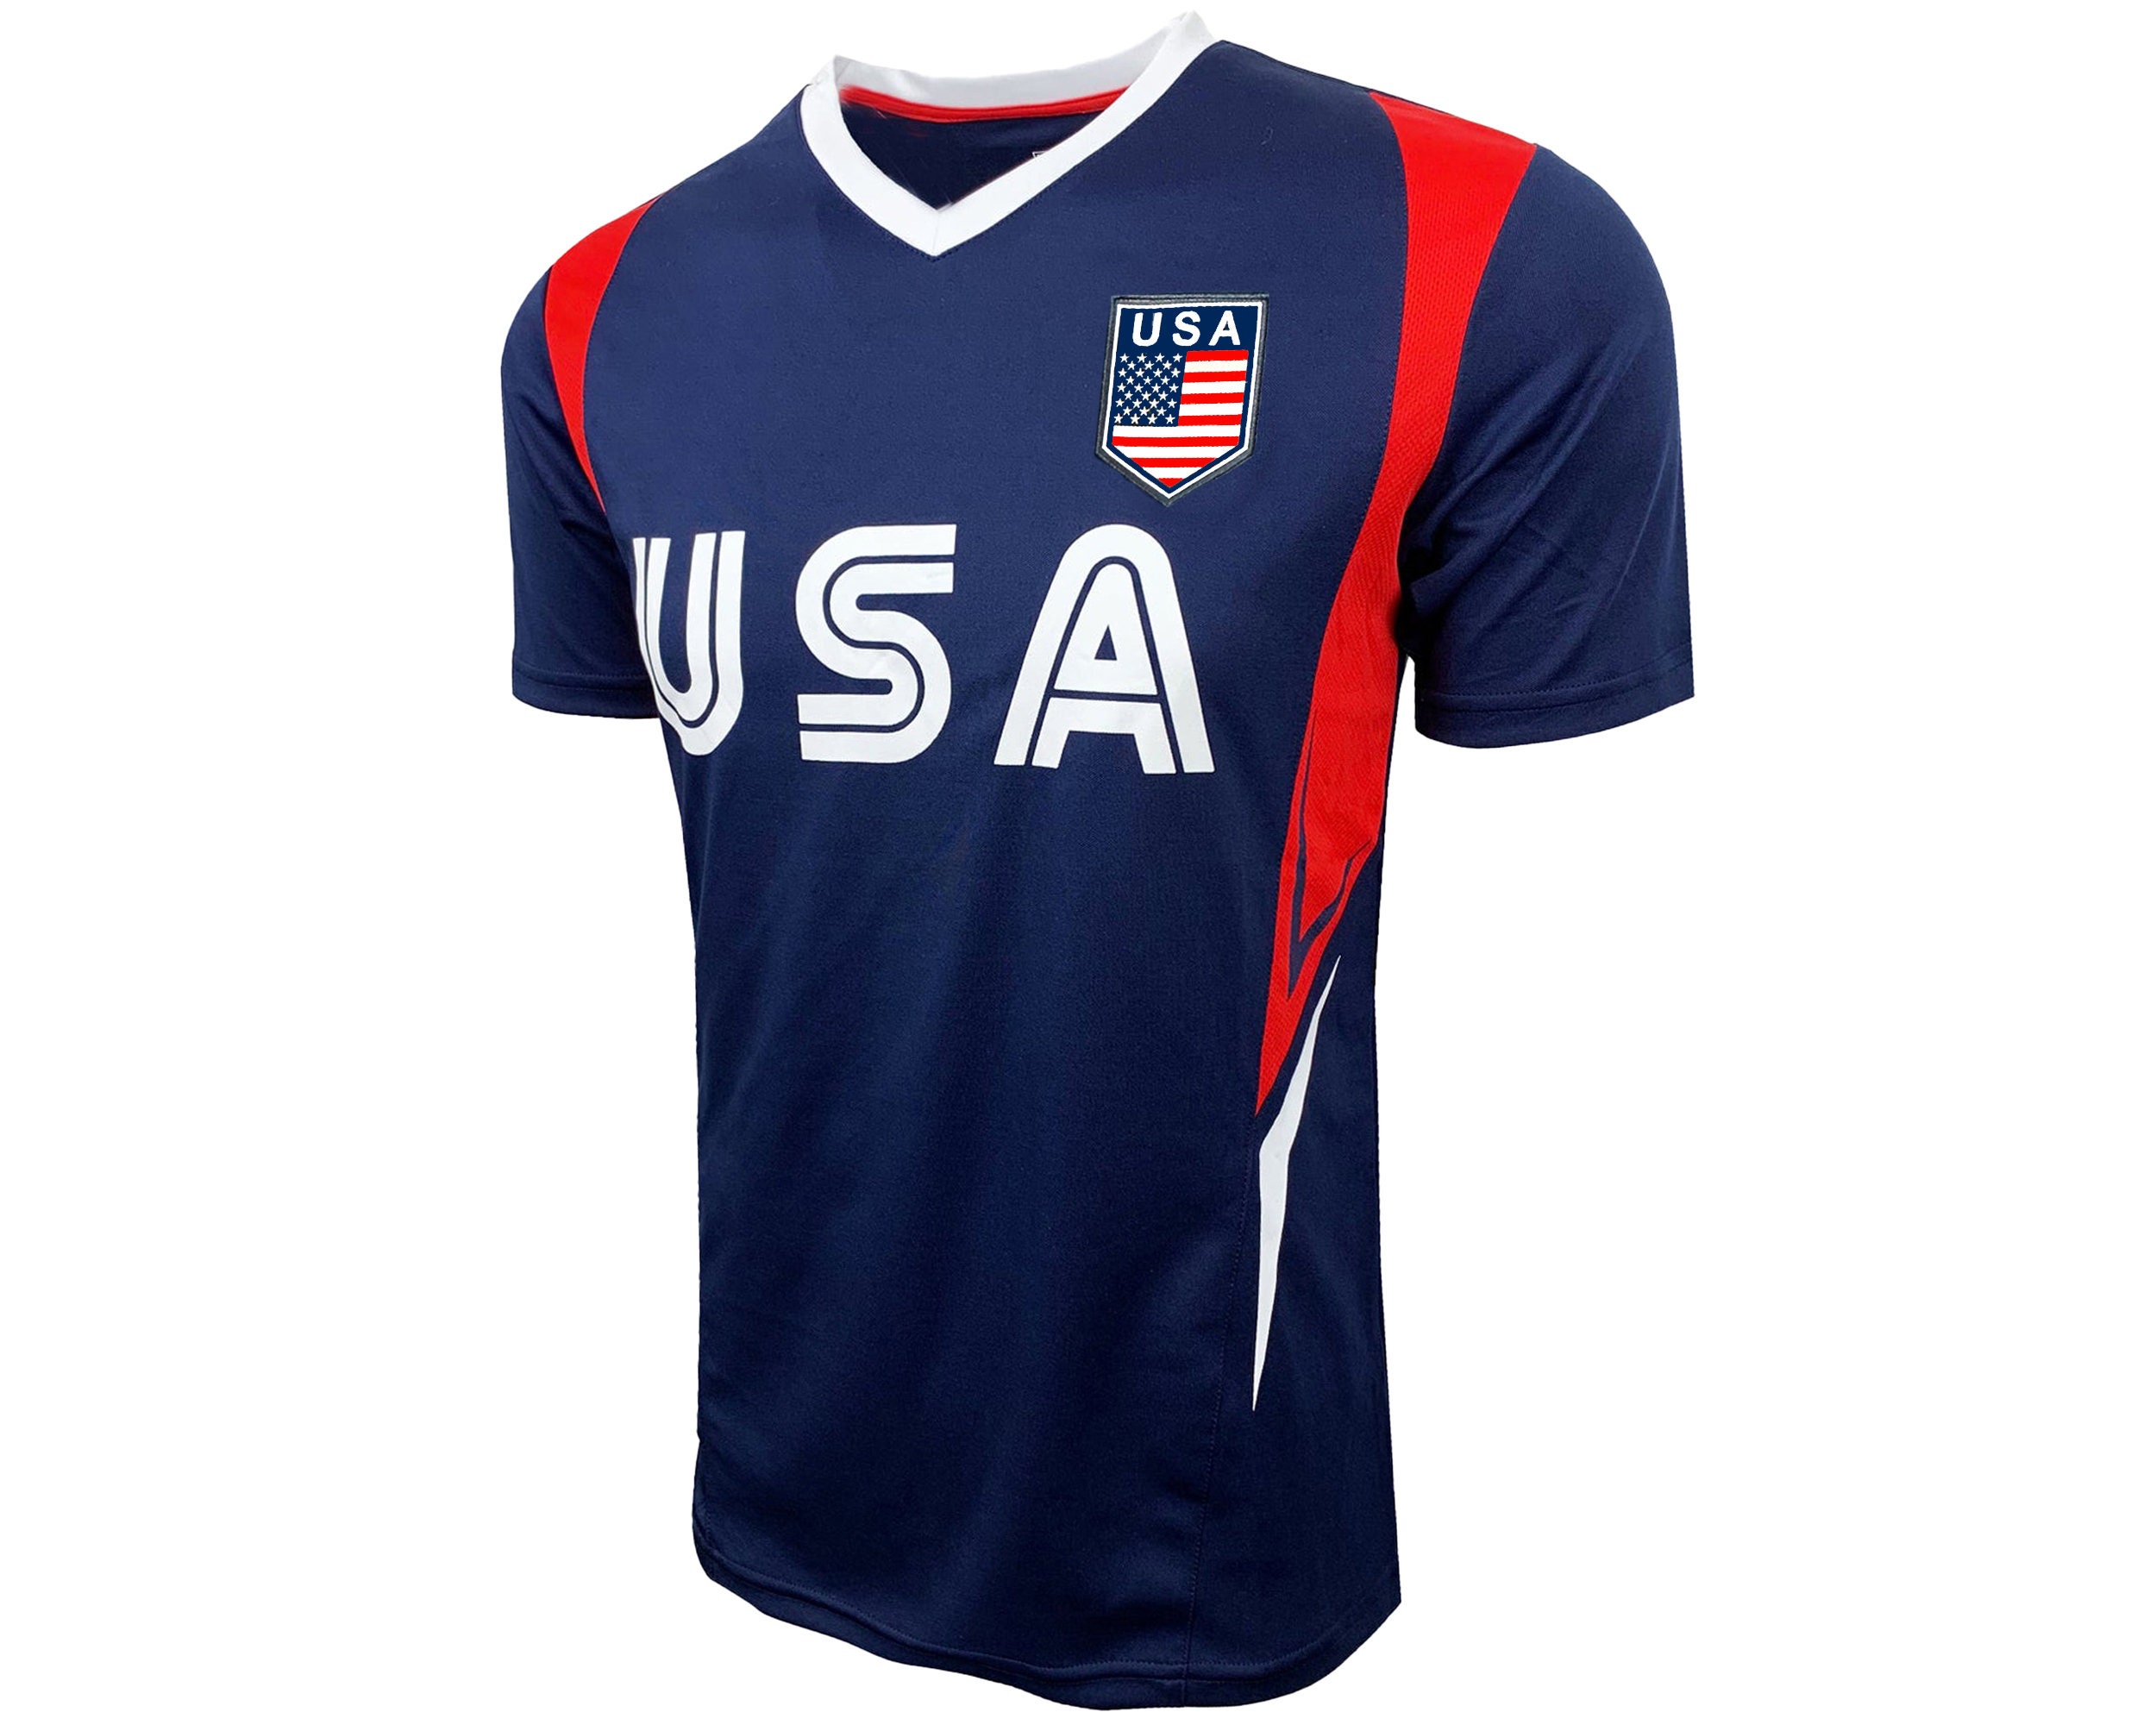 2003 USMNT Home Original Nike Authentic Kit Shirt Soccer Sash Jersey USA XL